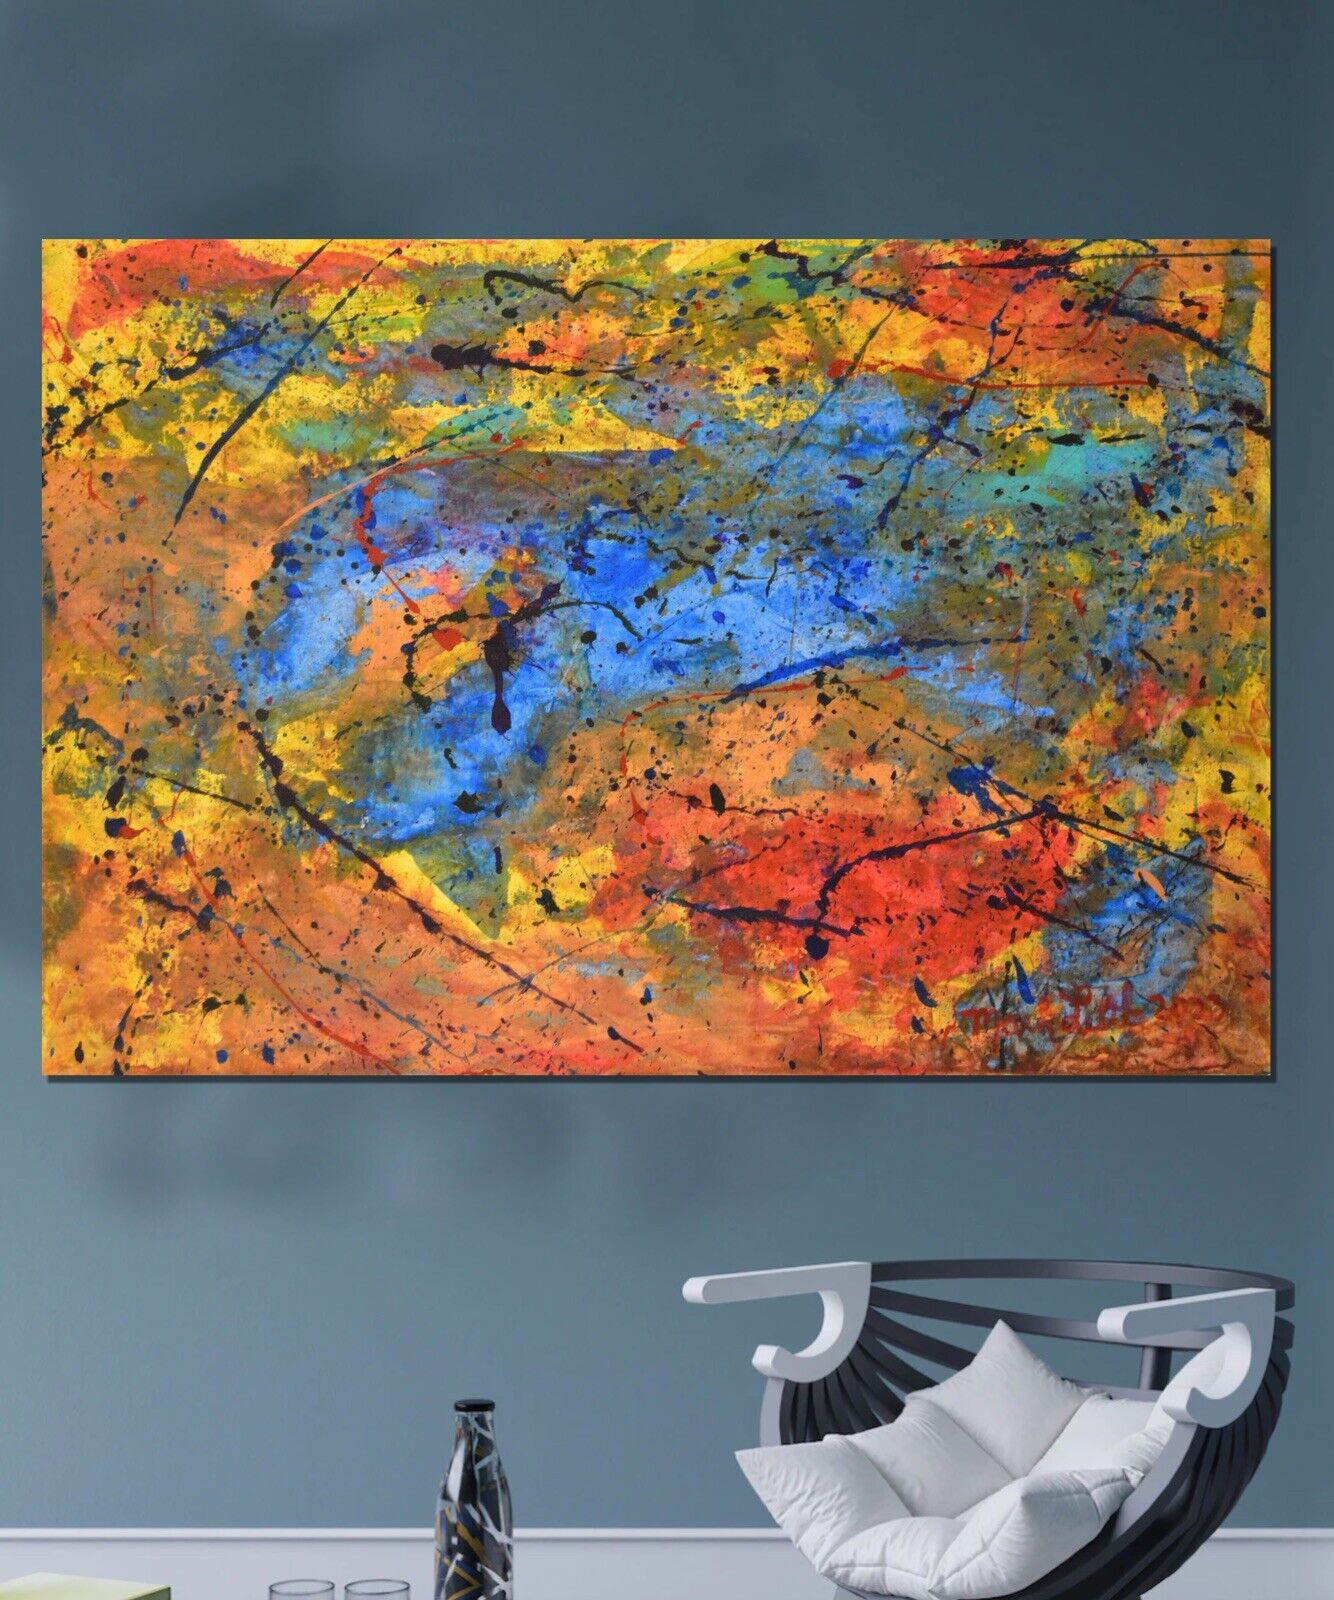 64”X44” Pollock/Richter style canvas ￼painting Acrylic,Abstract, Modern,X Large Без бренда - фотография #7